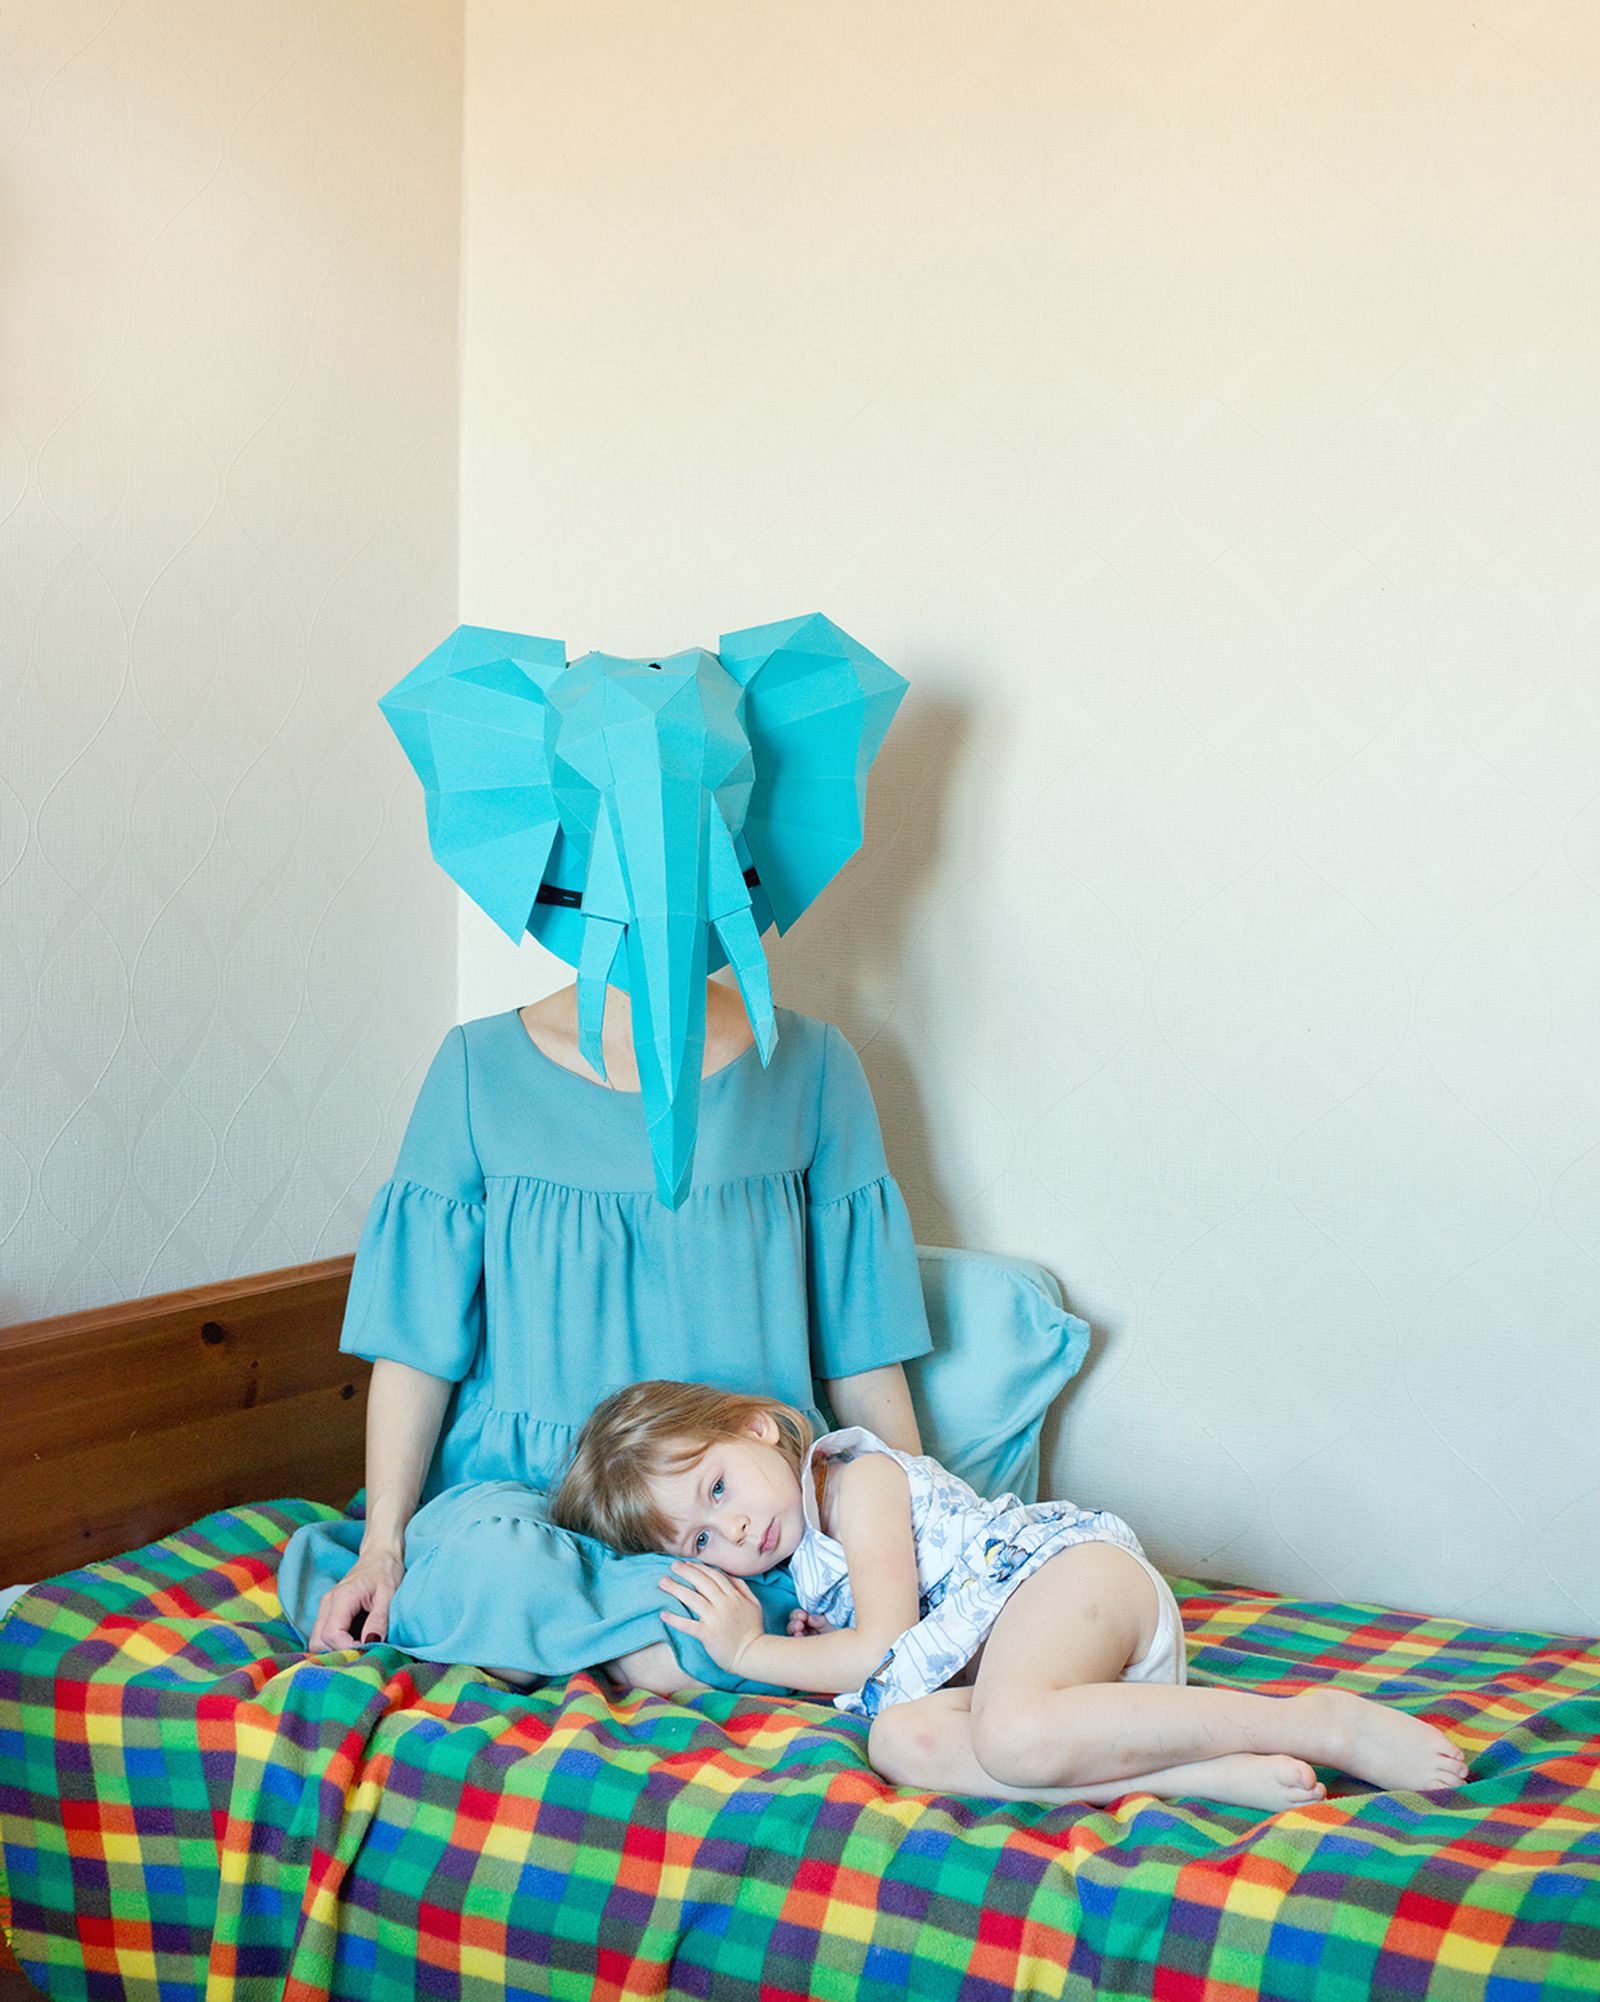 © Alena Zhandarova - Image from the Hidden Motherhood photography project